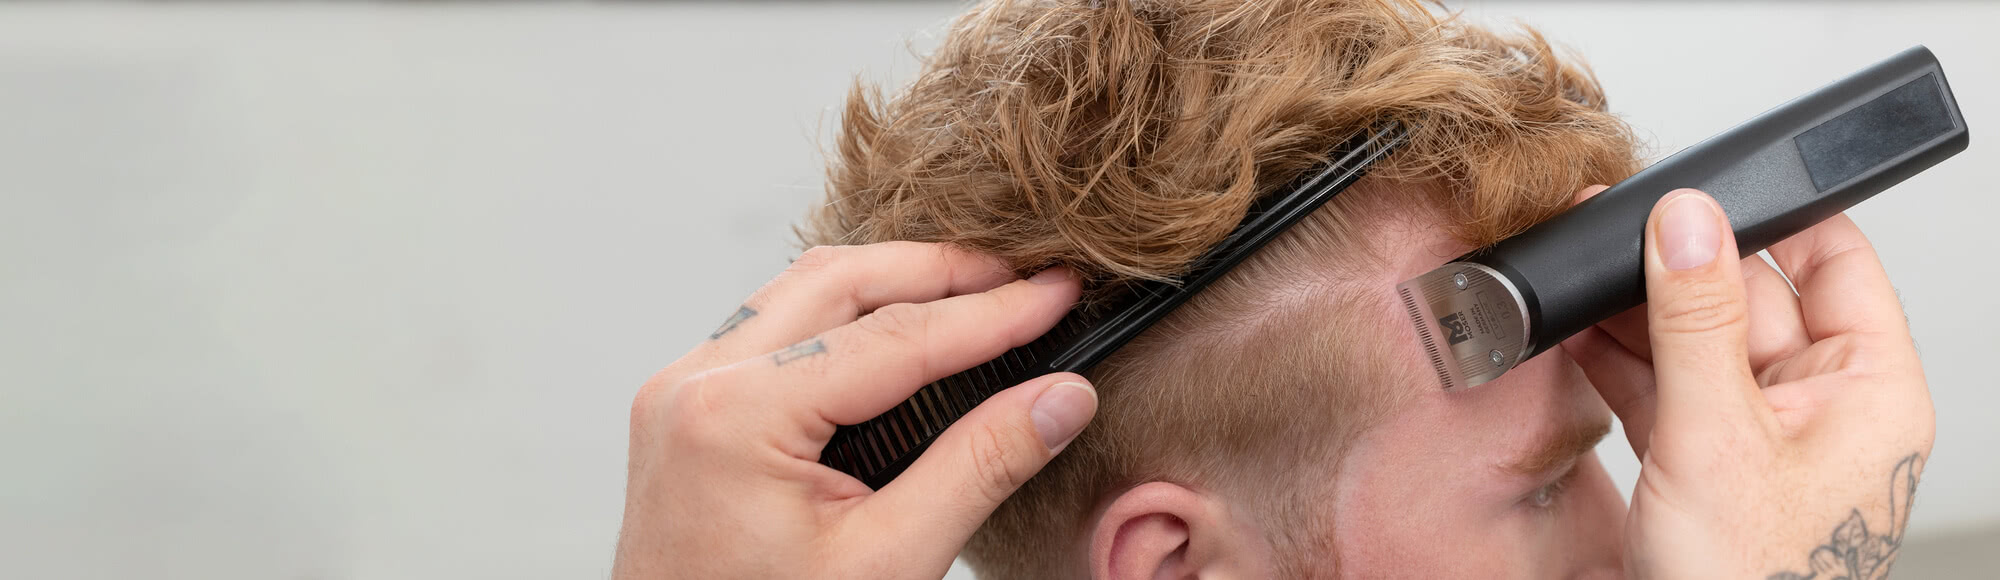 tondeuse de coupe - Tondeuse coiffure à fil - Tondeuse Moser Type 1230 -   - Hairpro coiffure